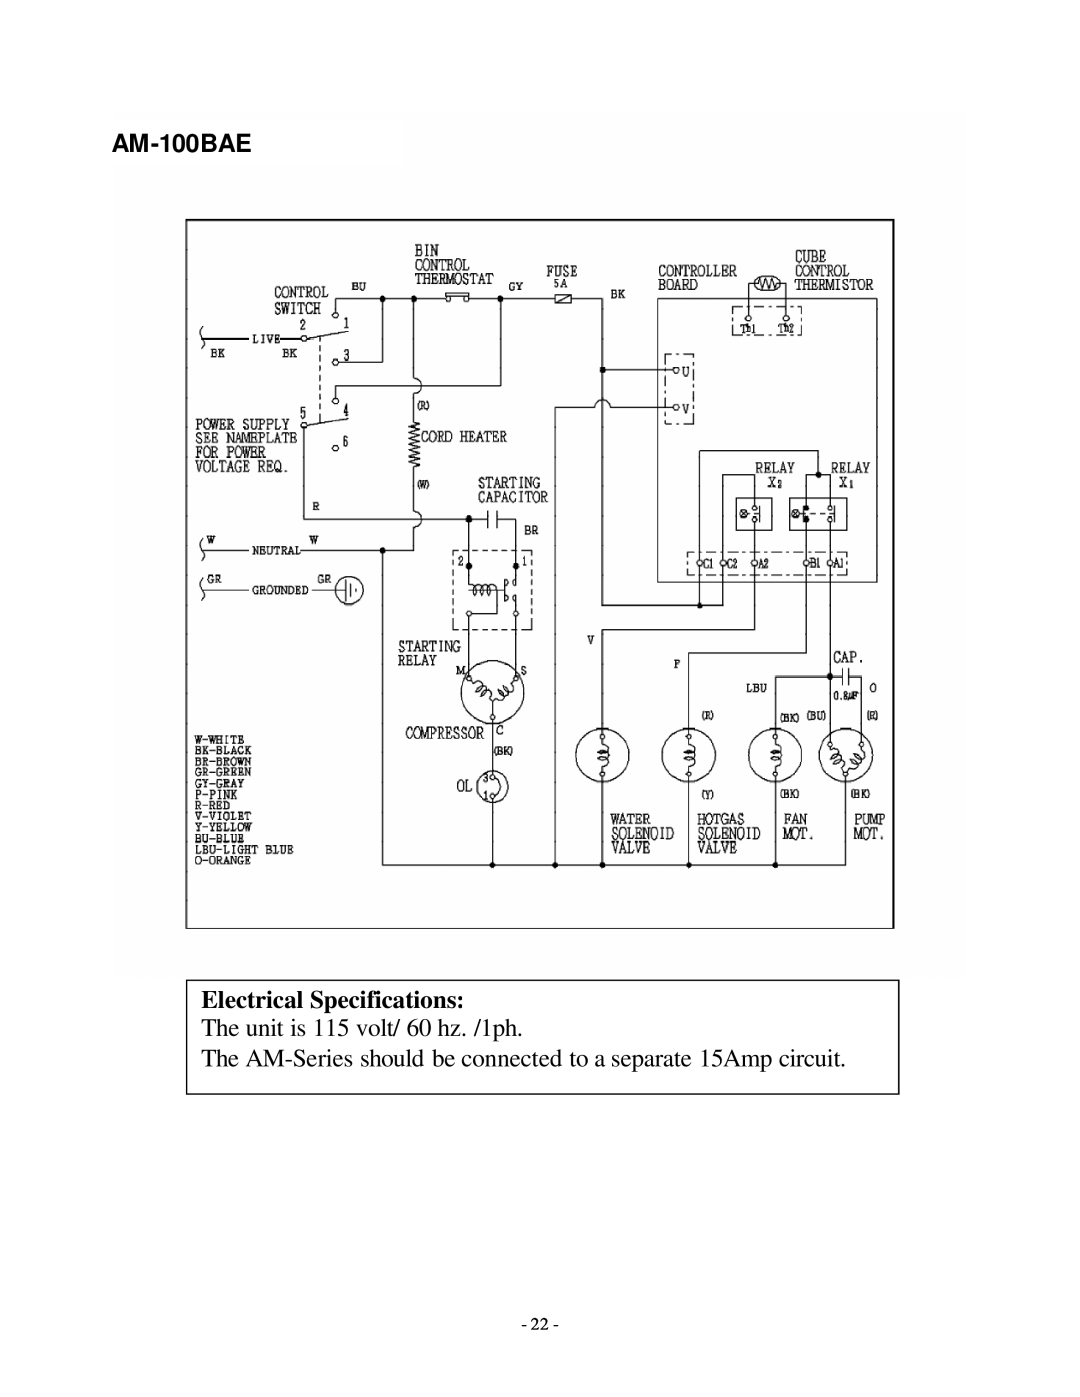 Hoshizaki AM-50BAE manual AM-100BAE, Electrical Specifications 